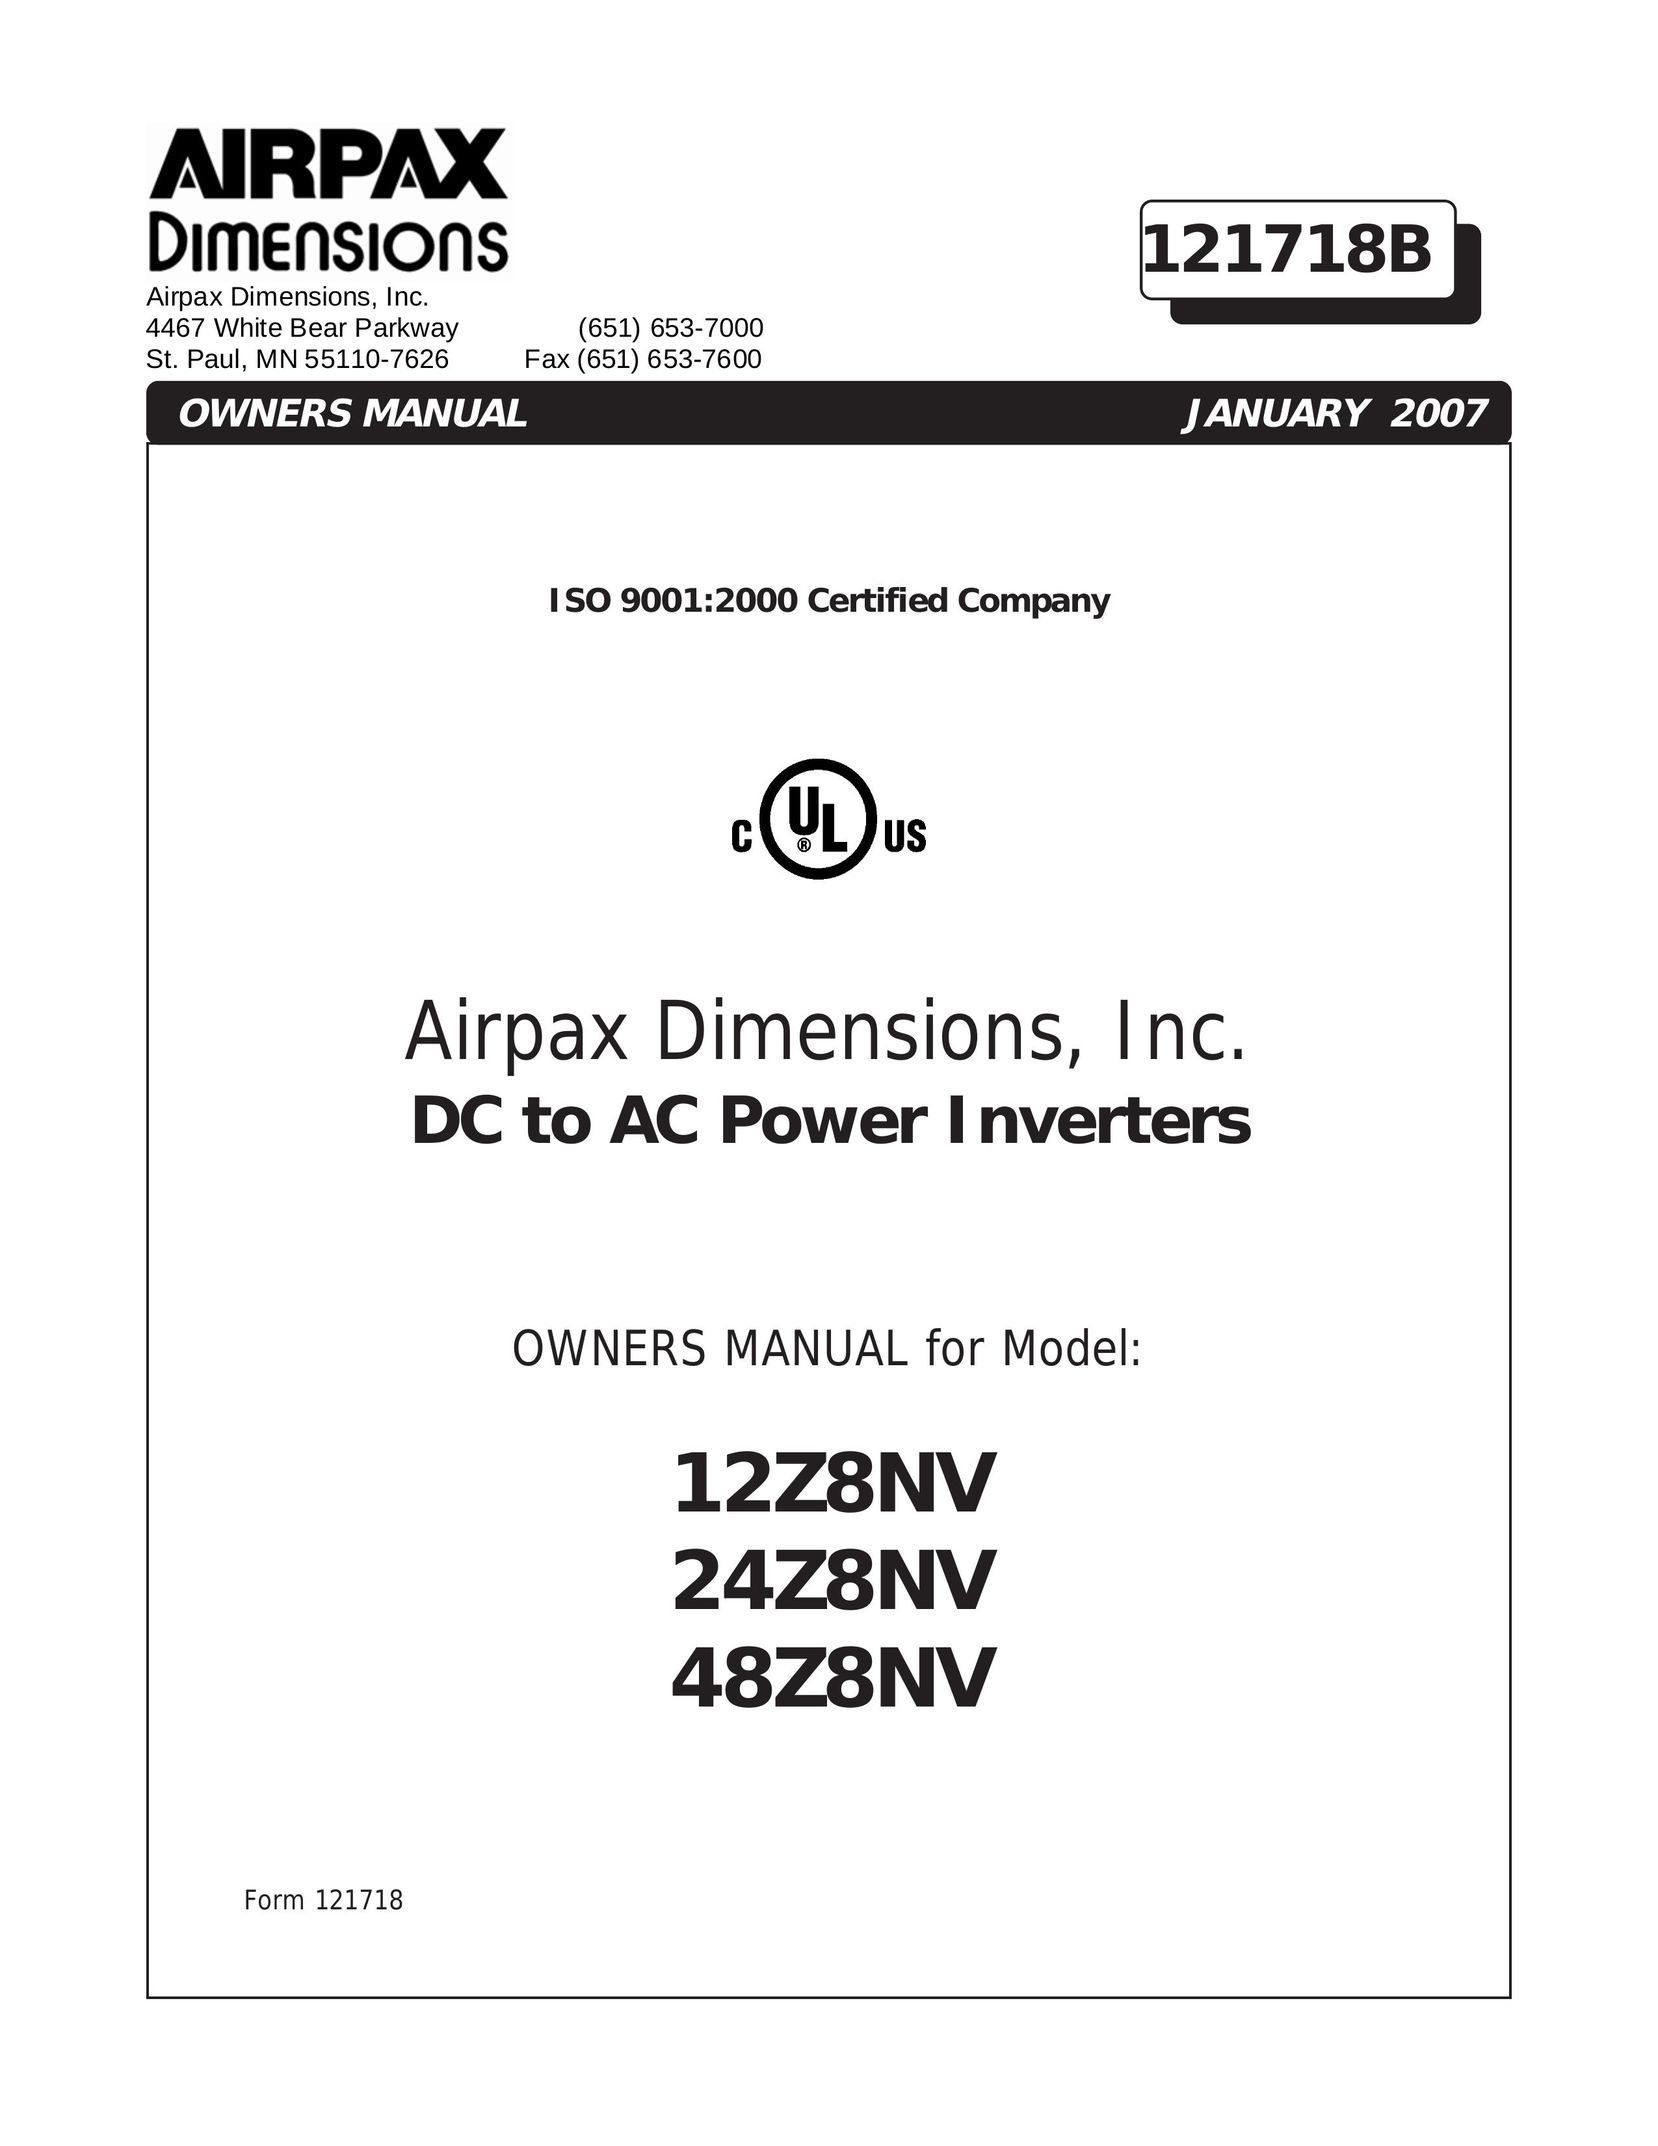 Certified International 48Z8NV Welding System User Manual